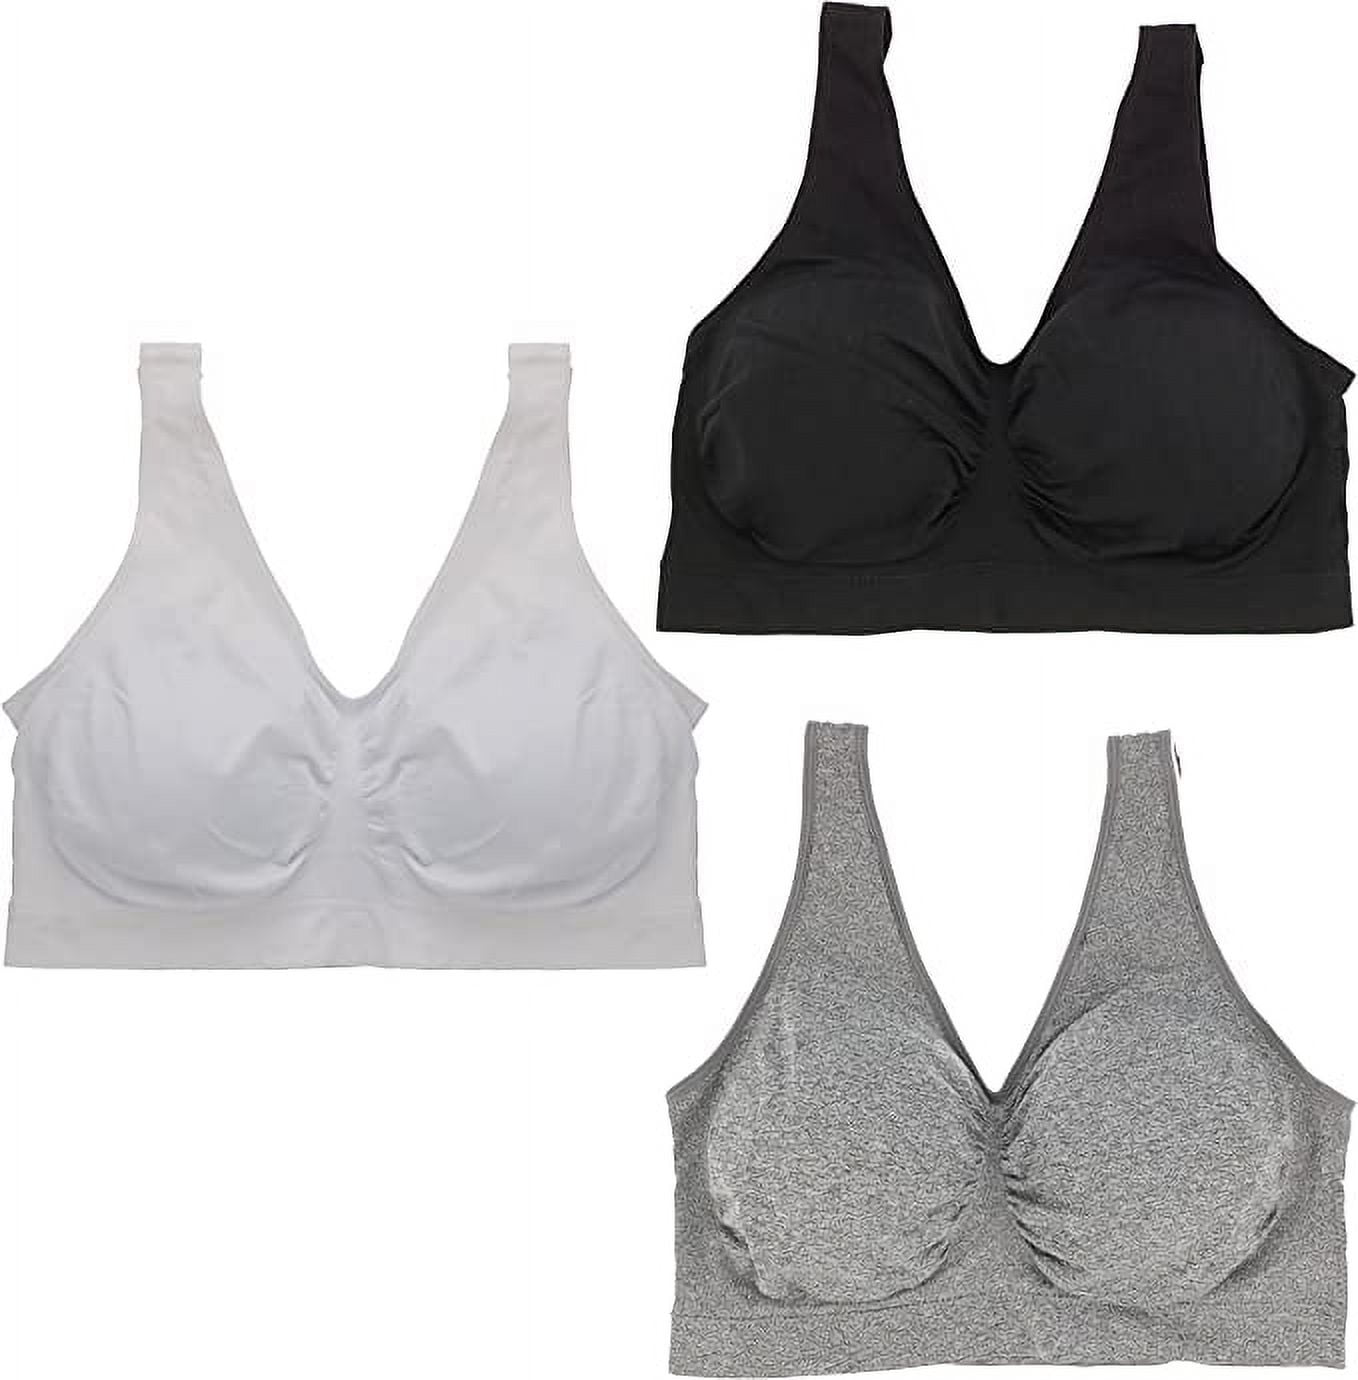 Delta Burke Intimates Women's Plus-Size Seamless Comfort Bra - 3 Pack -  Grey, White, & Black - 2X